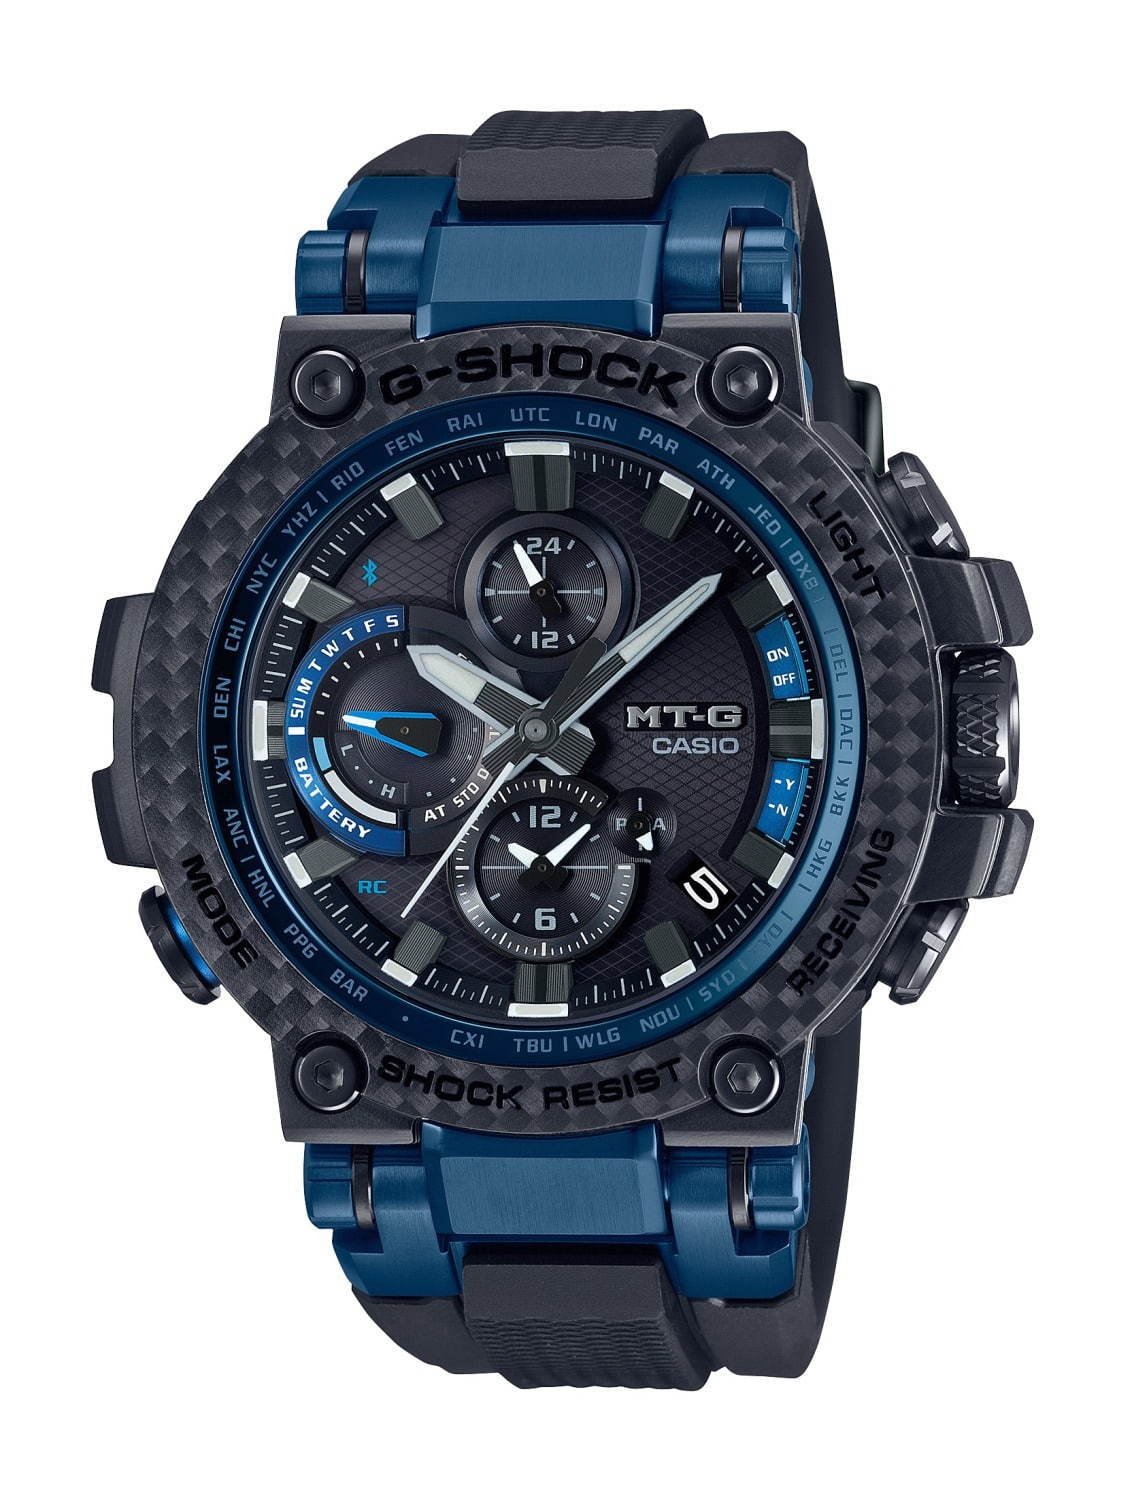 G-SHOCK「MT-G」新作腕時計 - レッド＆ブルーの2色で、ベゼルに